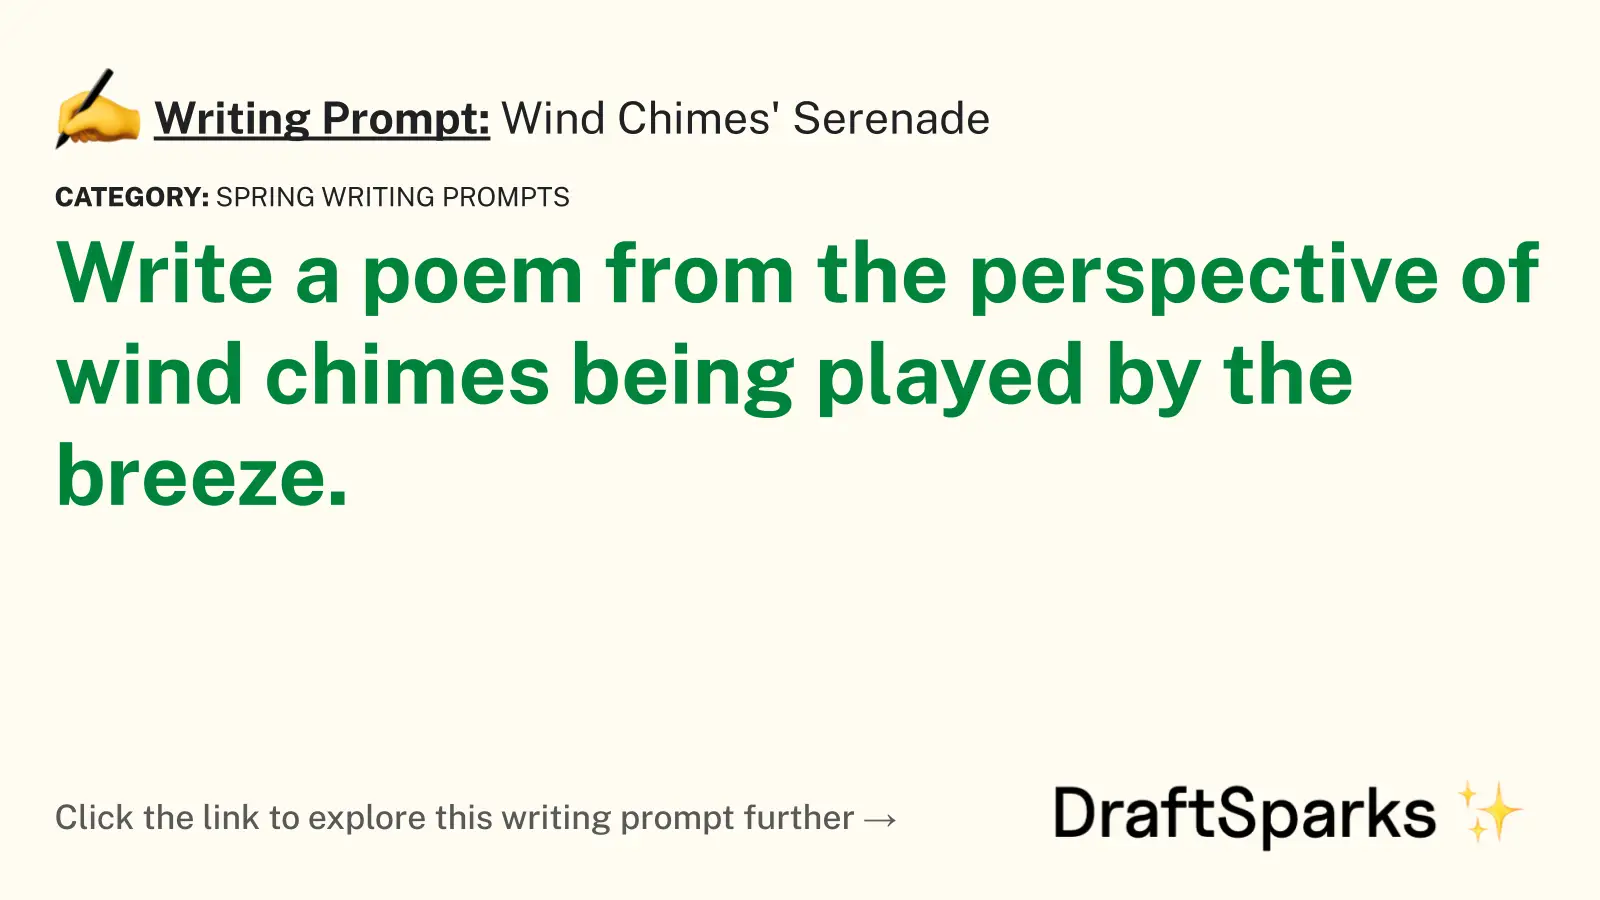 Wind Chimes’ Serenade